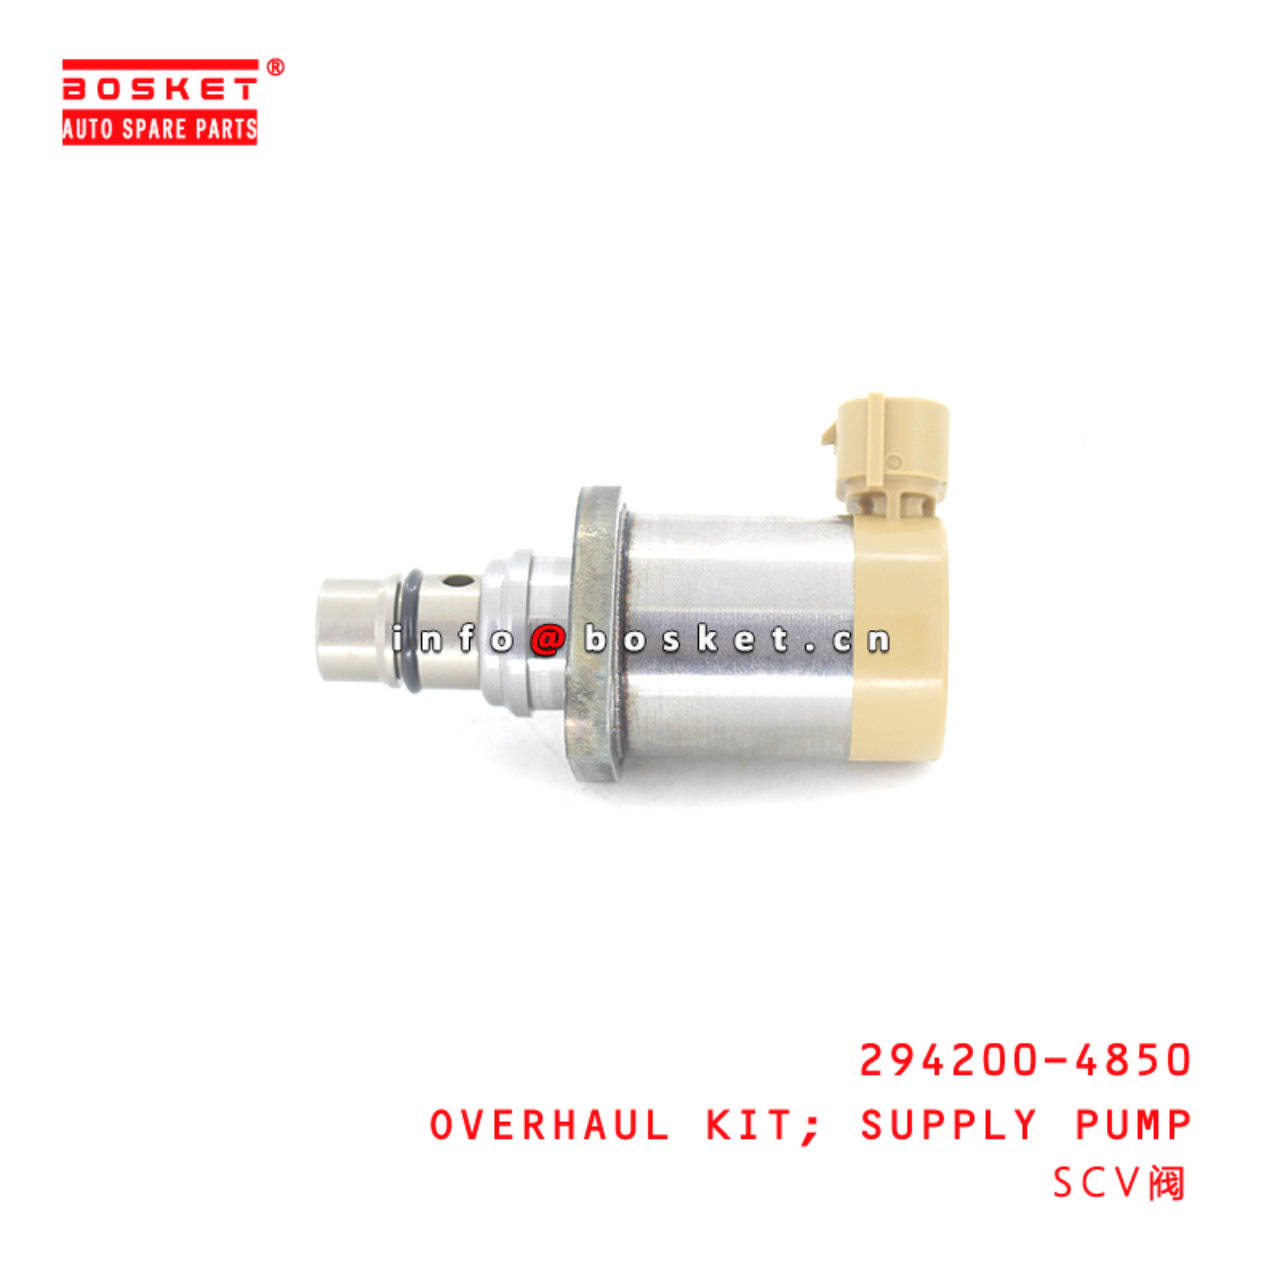 294200-4850 Supply Pump Overhaul Kit Suitable for ISUZU HINO300